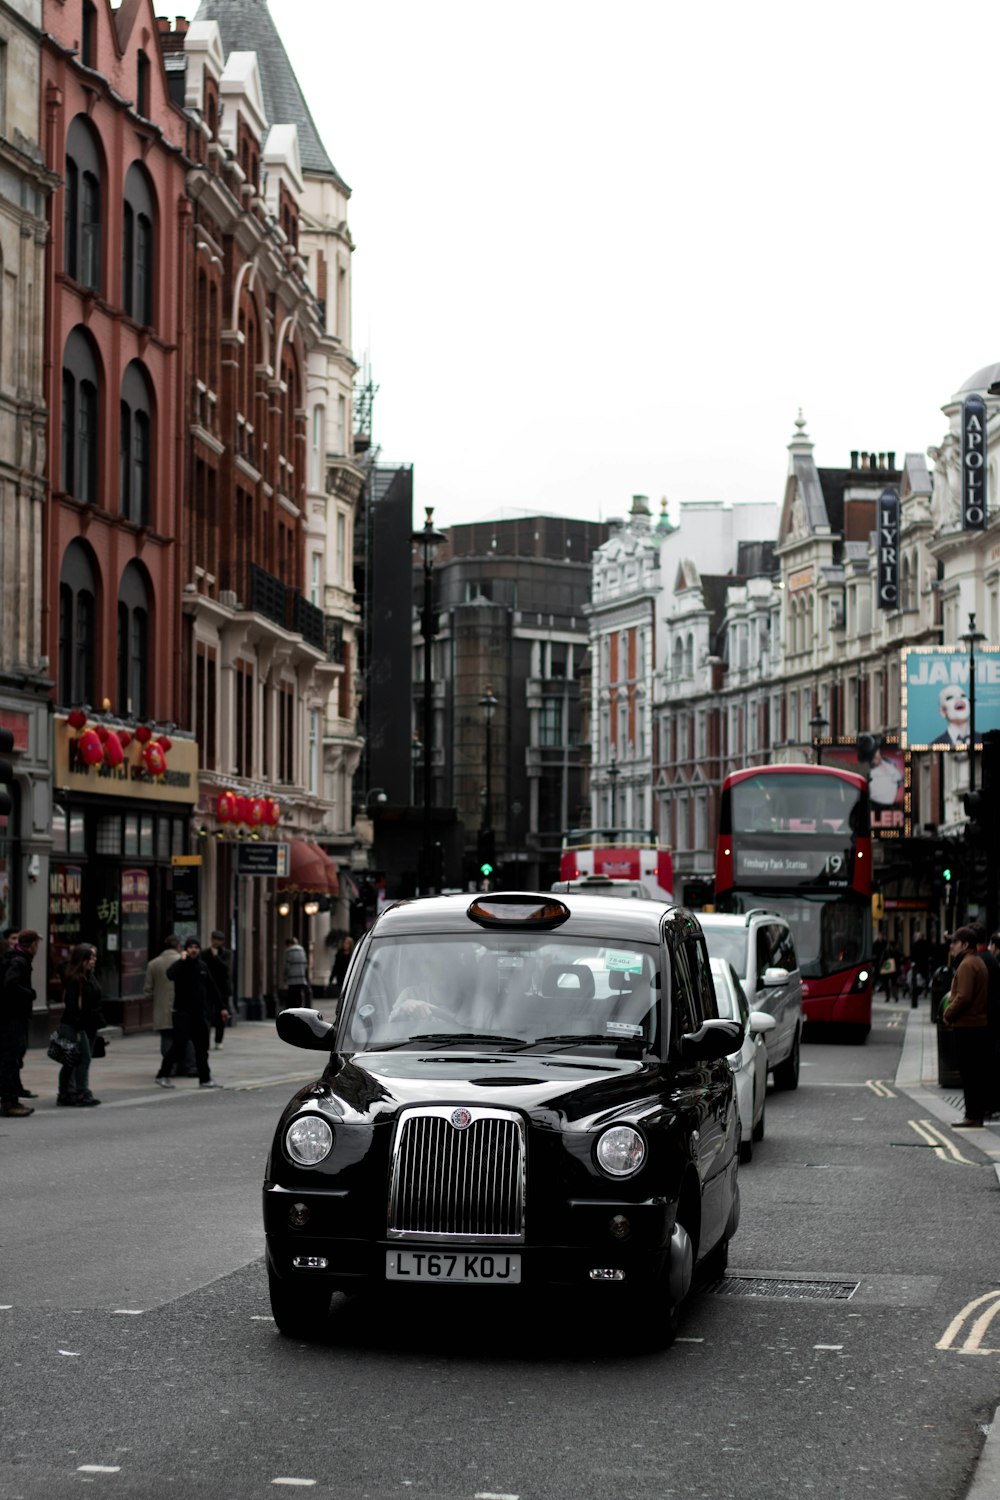 black cab on road during daytime